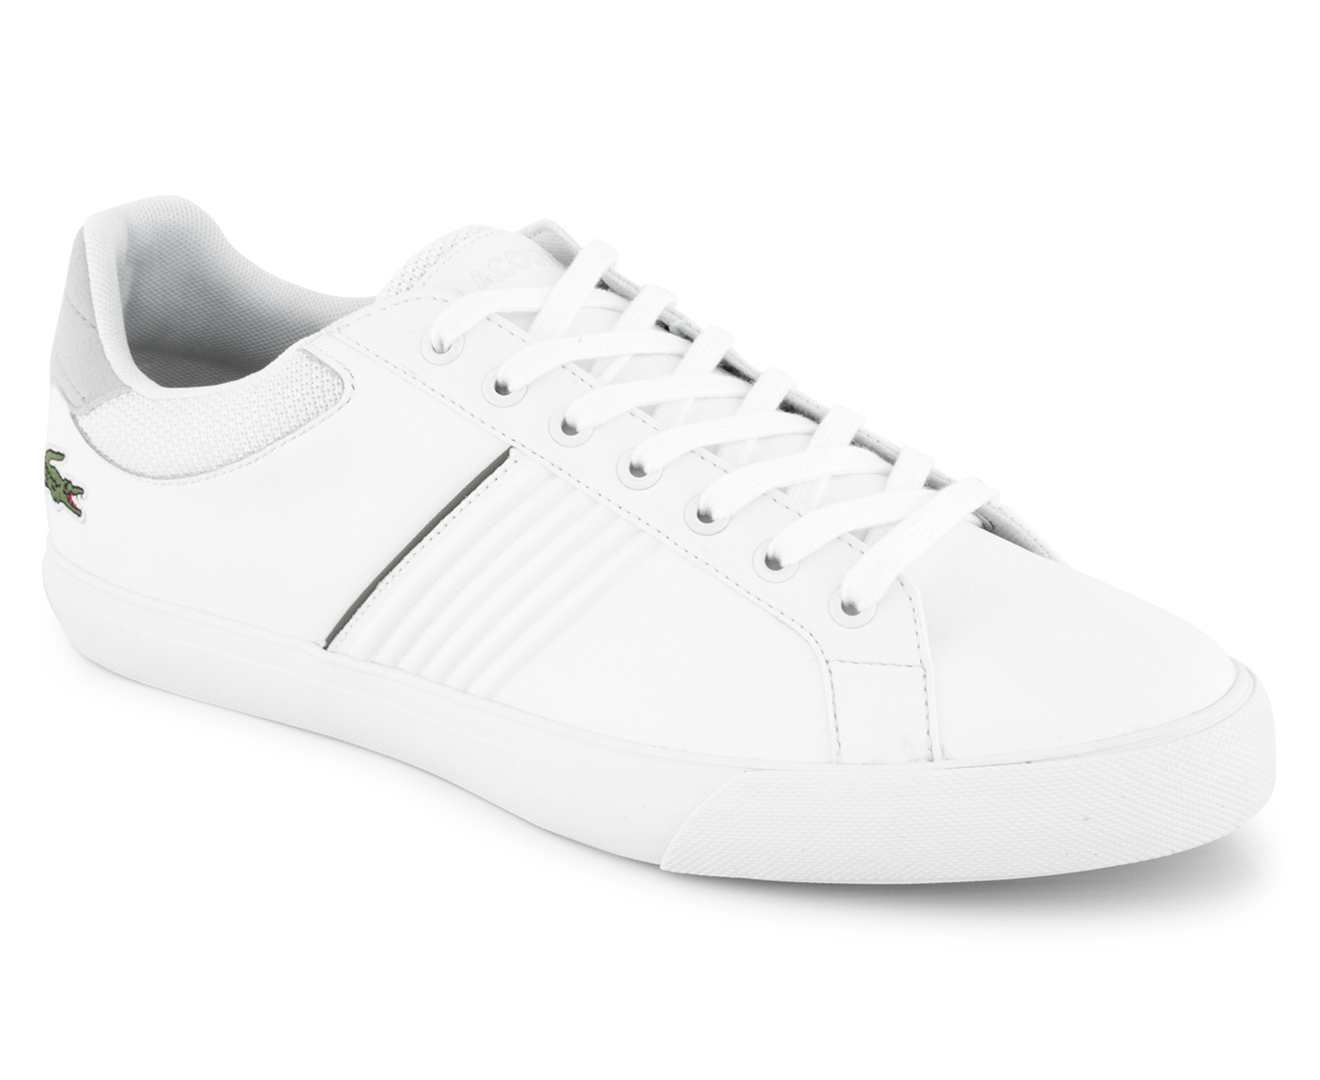 Lacoste Men's Fairlead 117 Shoe - White | Mumgo.com.au